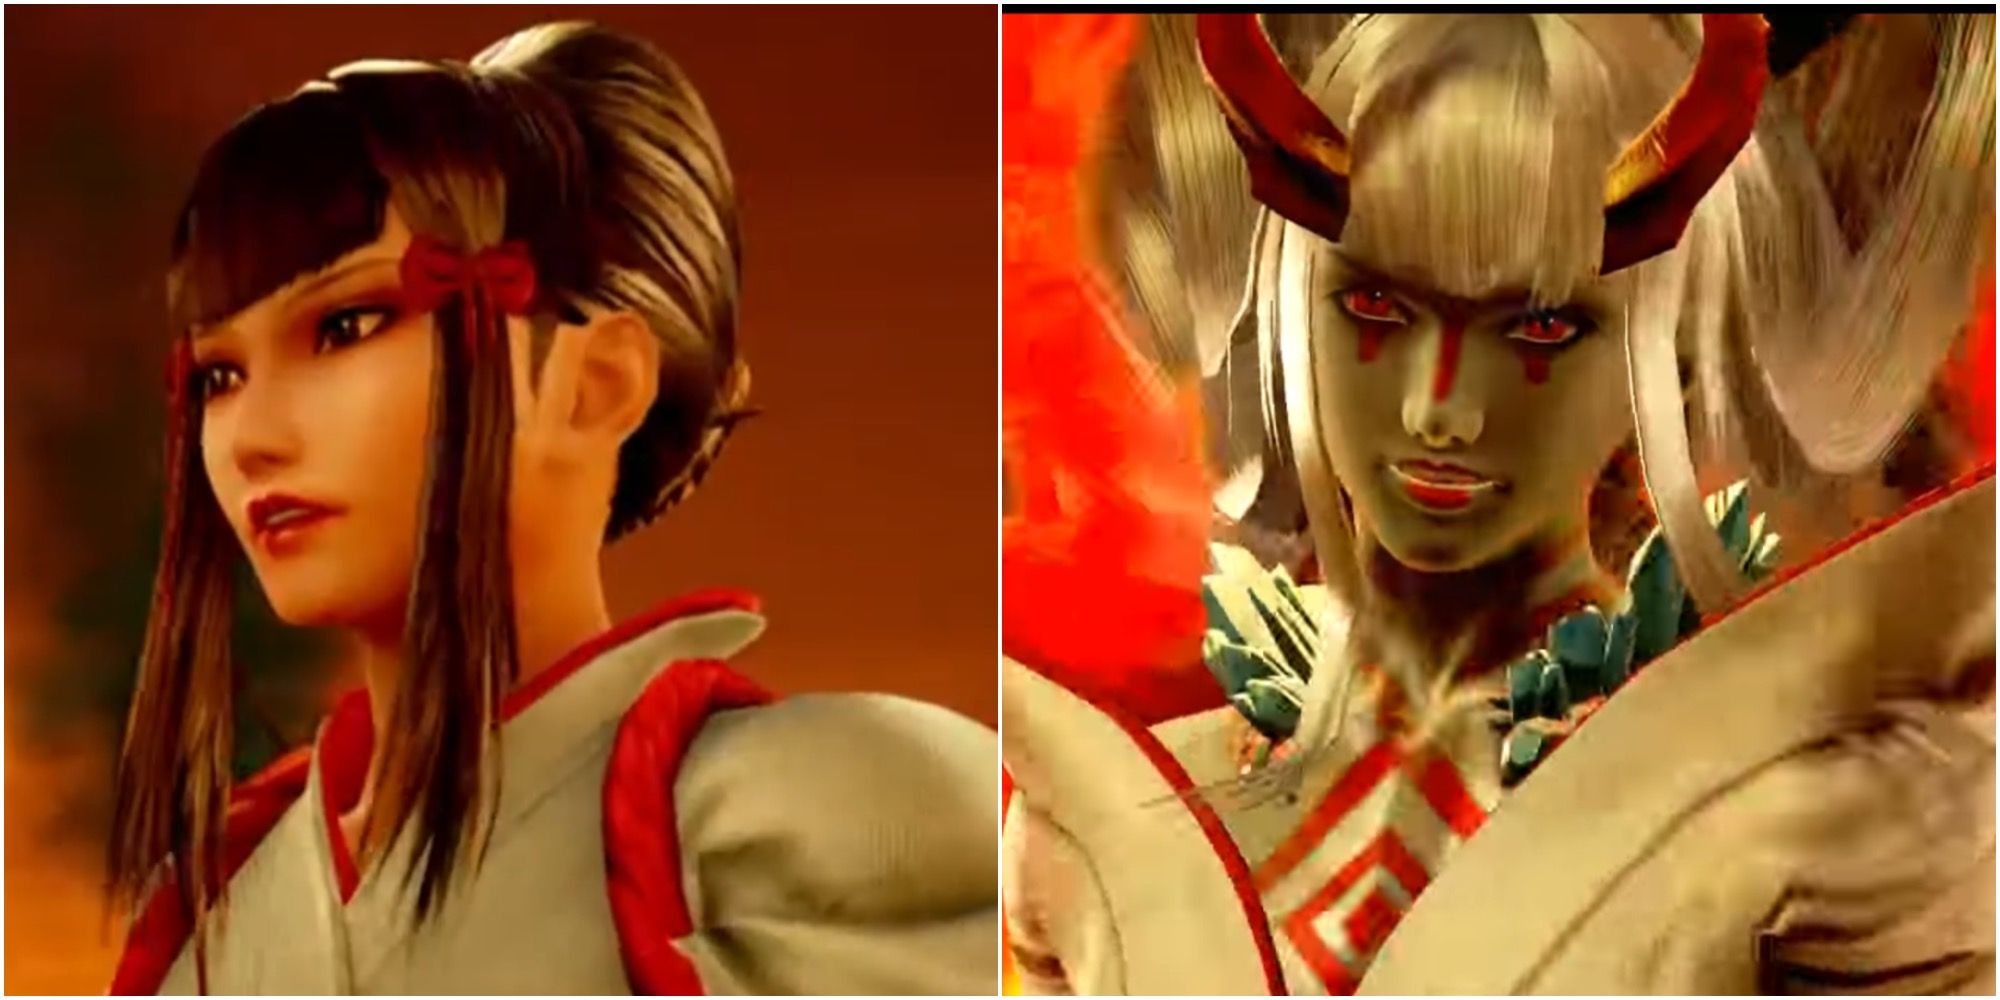 Tekken 7 Kazumi Mishima and her Devil form